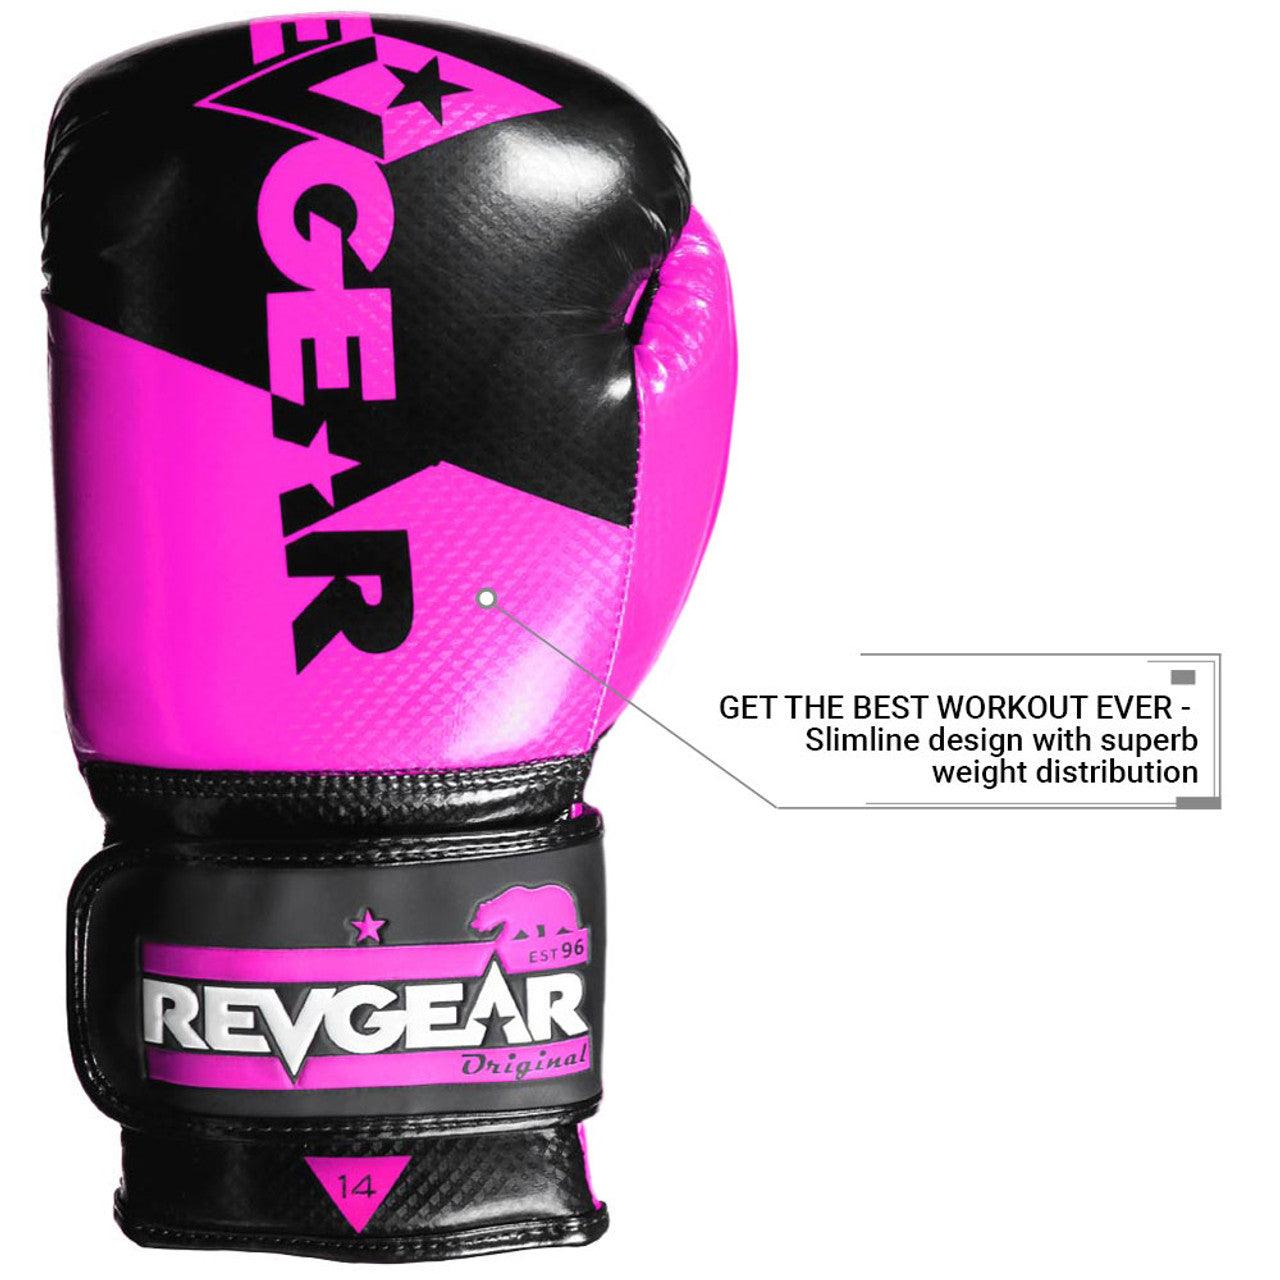 Pinnacle P4 Boxing Gloves - Black / Pink - Violent Art Shop